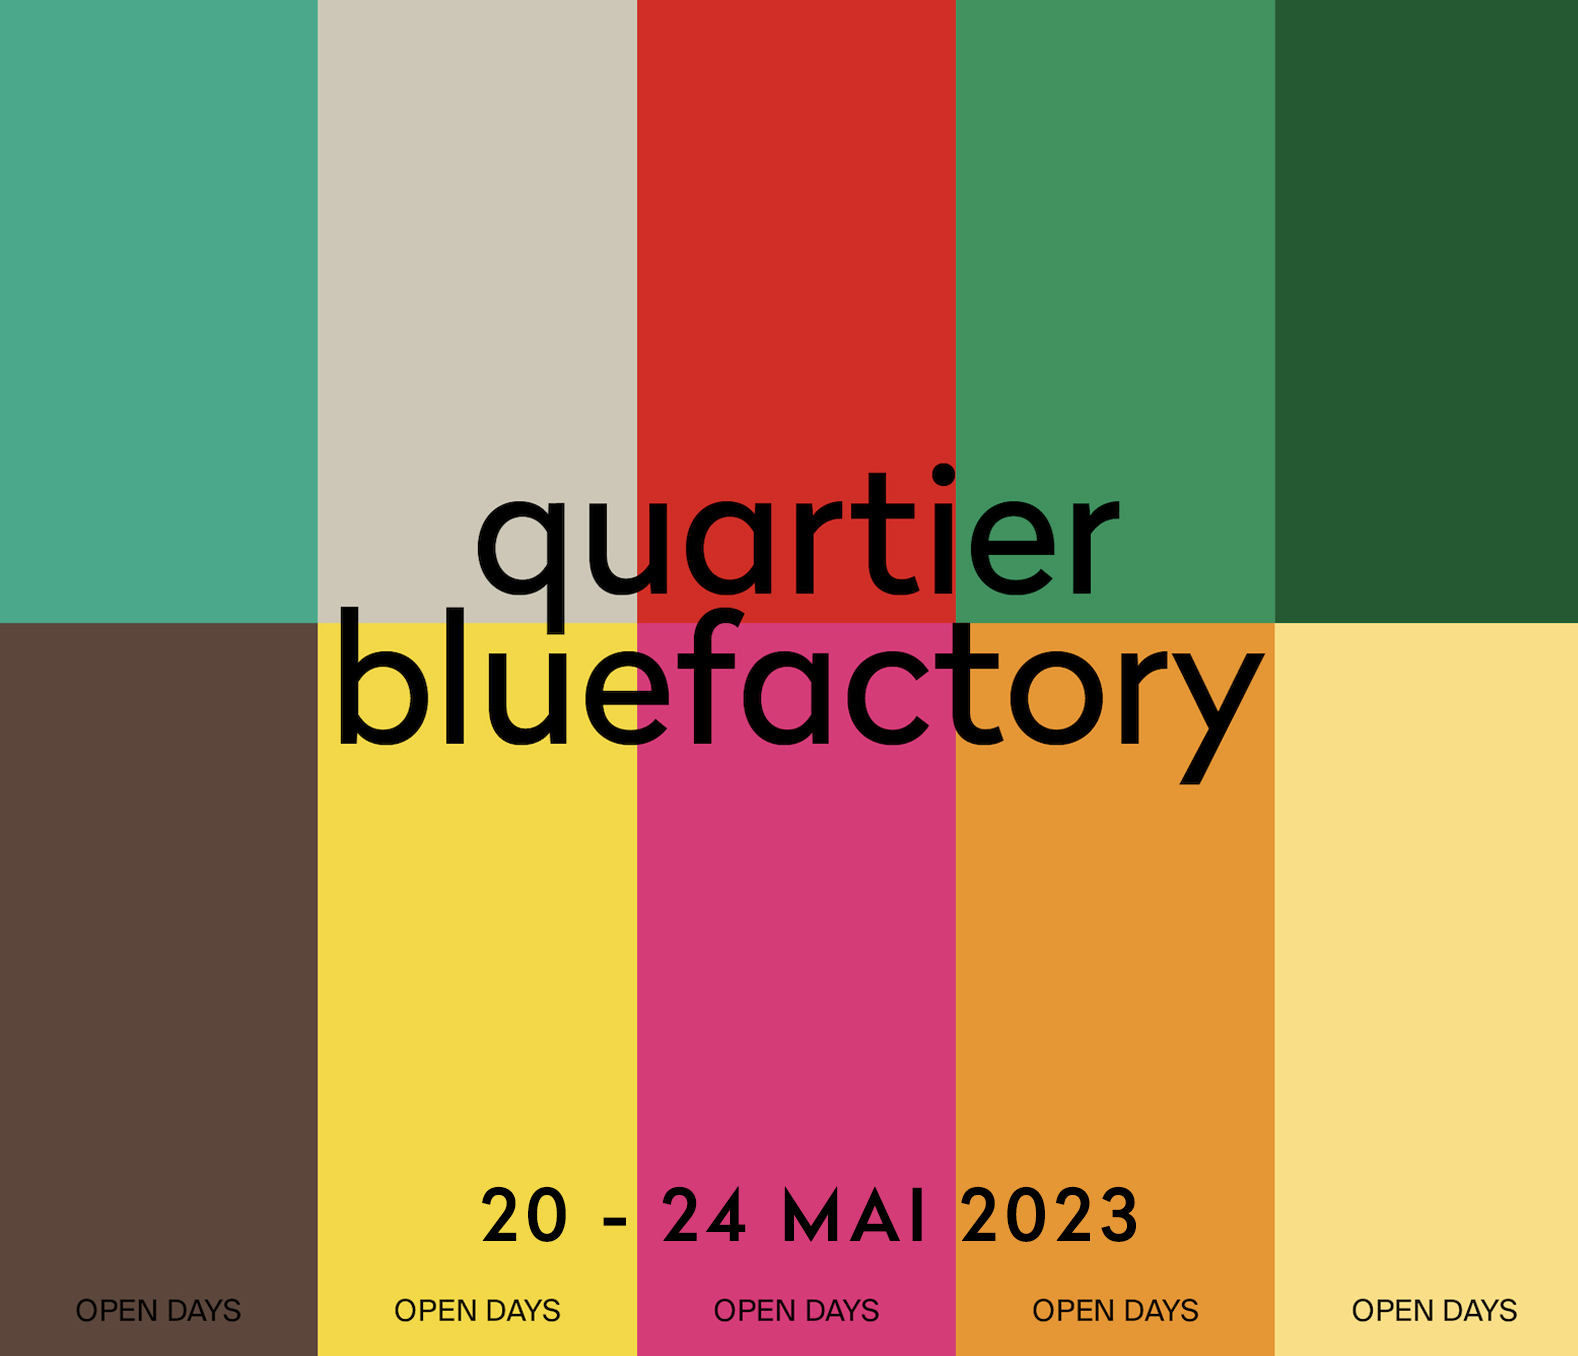 Blue Hour Bluefactory by STEMUTZ, 29.03.2022